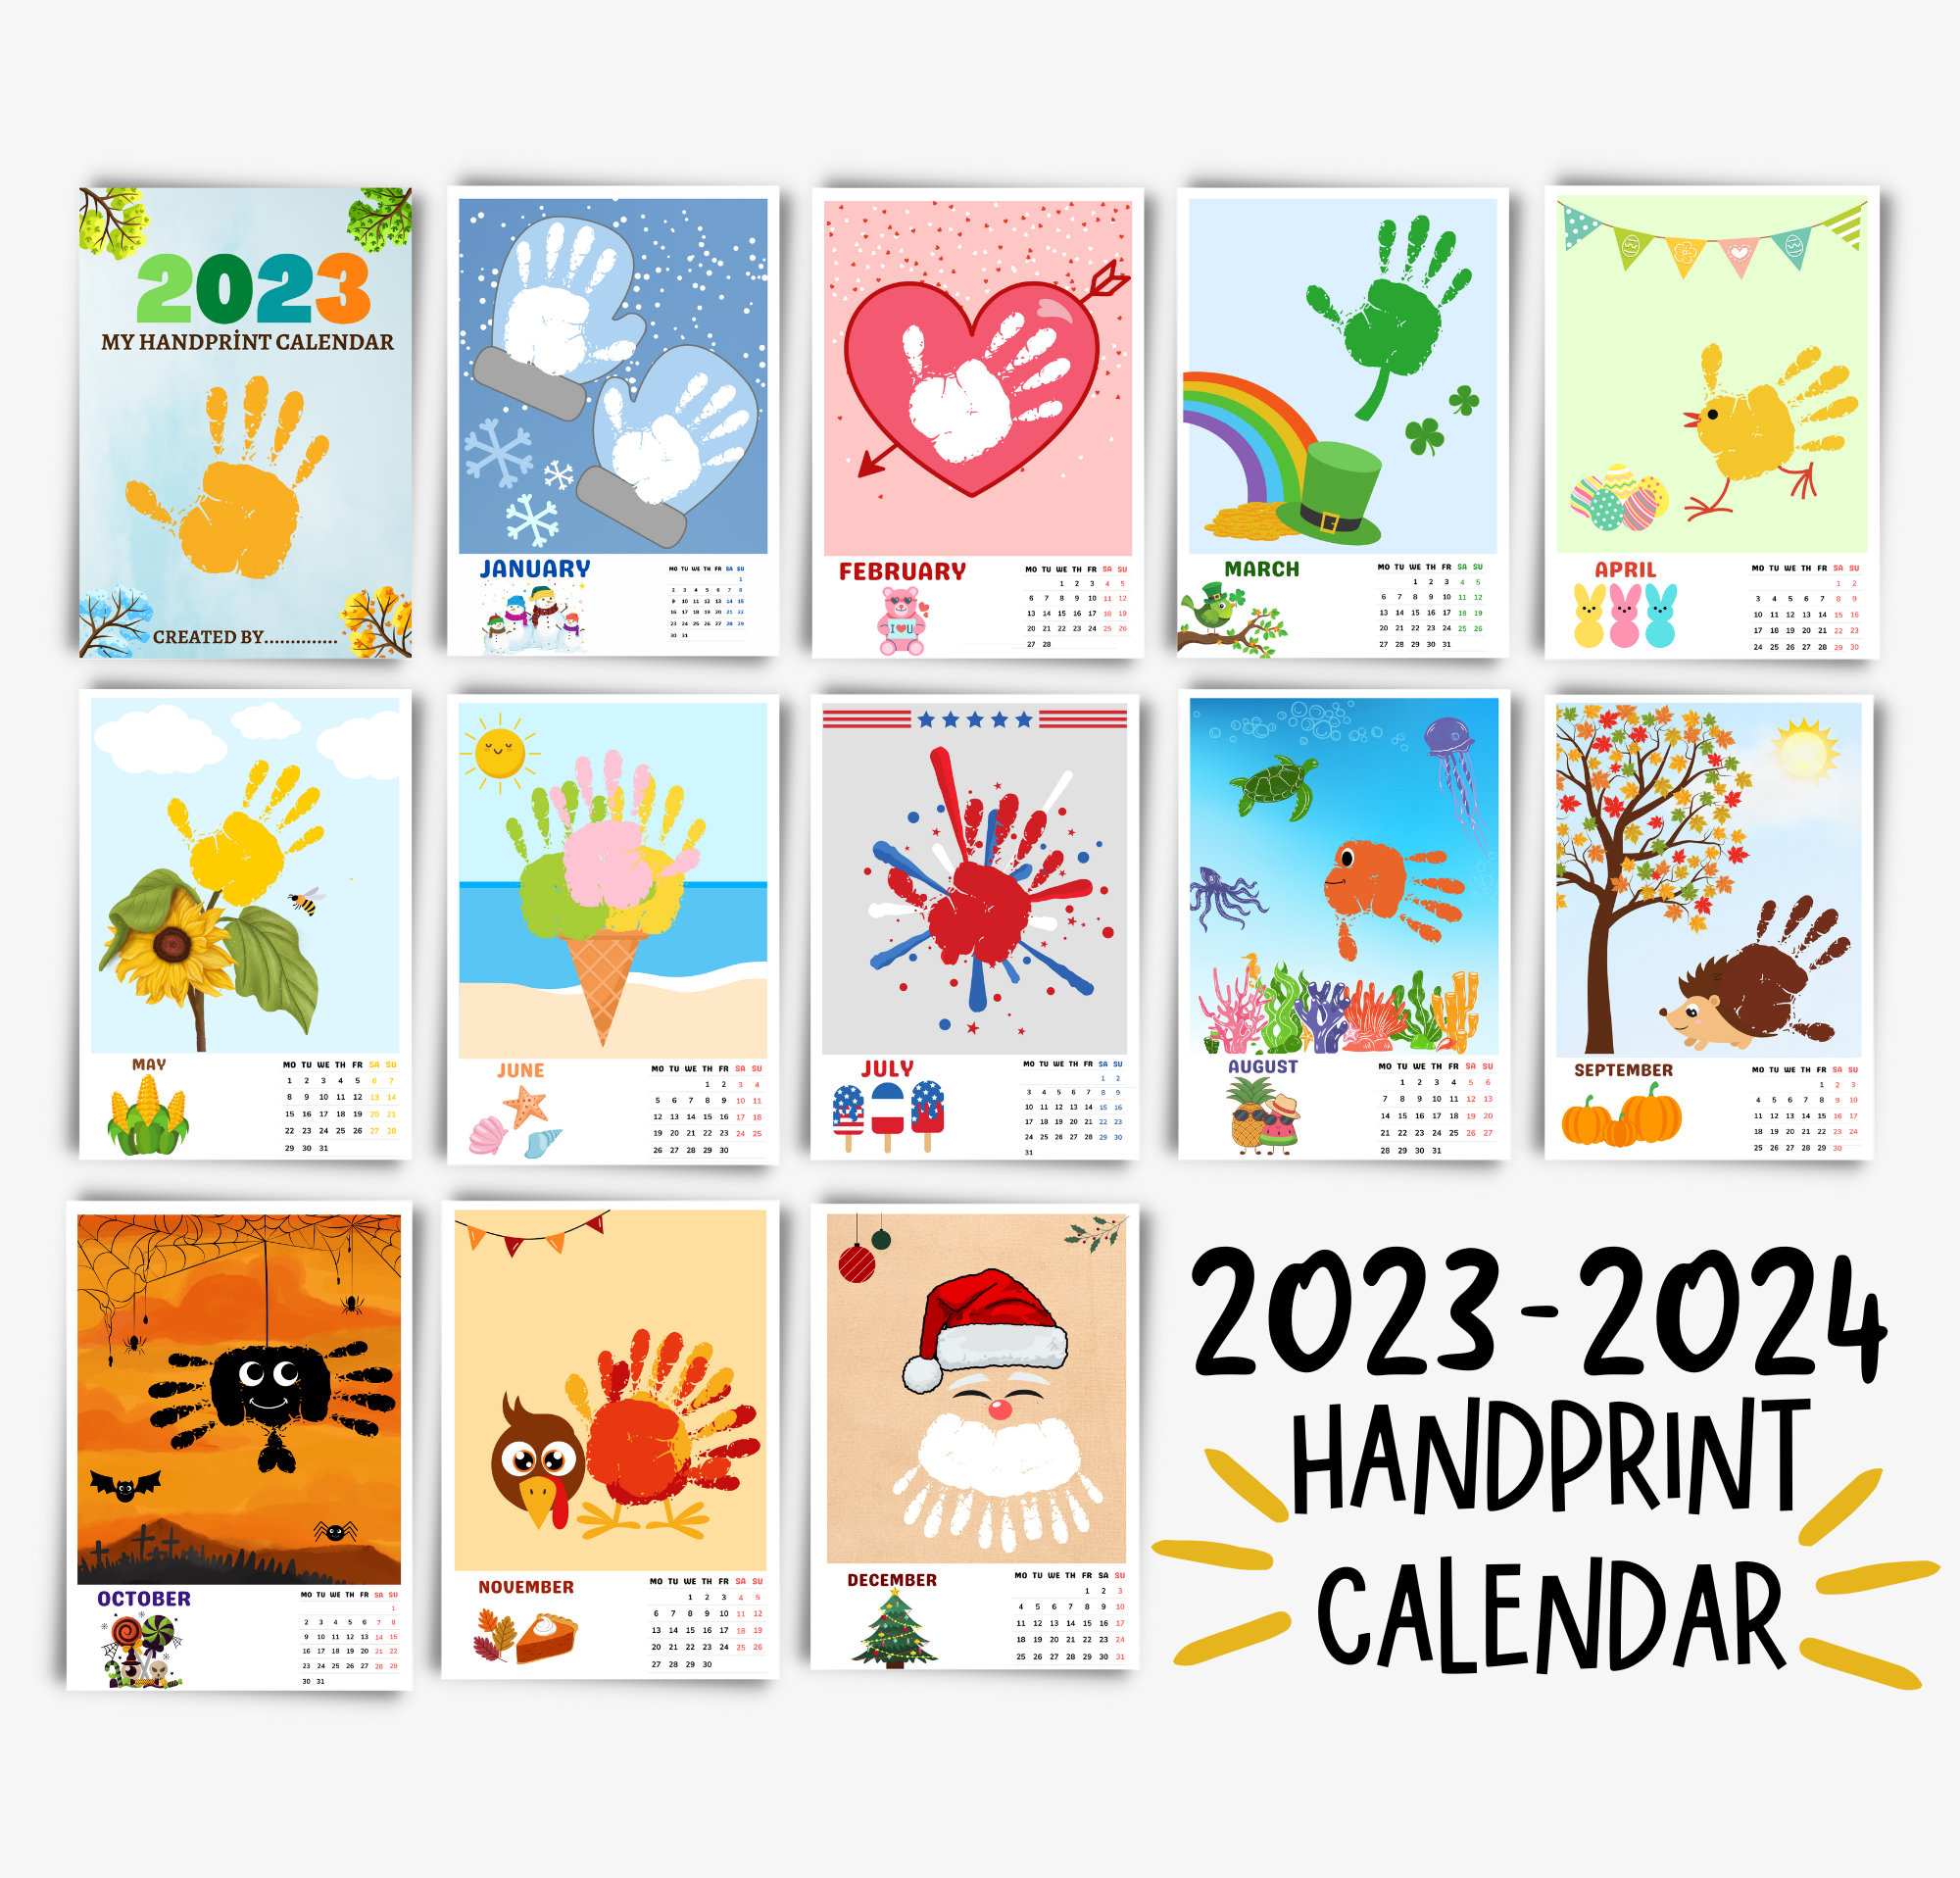 2023-2024 Handprint Calendar Footprint Handprint Art Craft - Etsy for Free Printable Handprint Calendar 2024